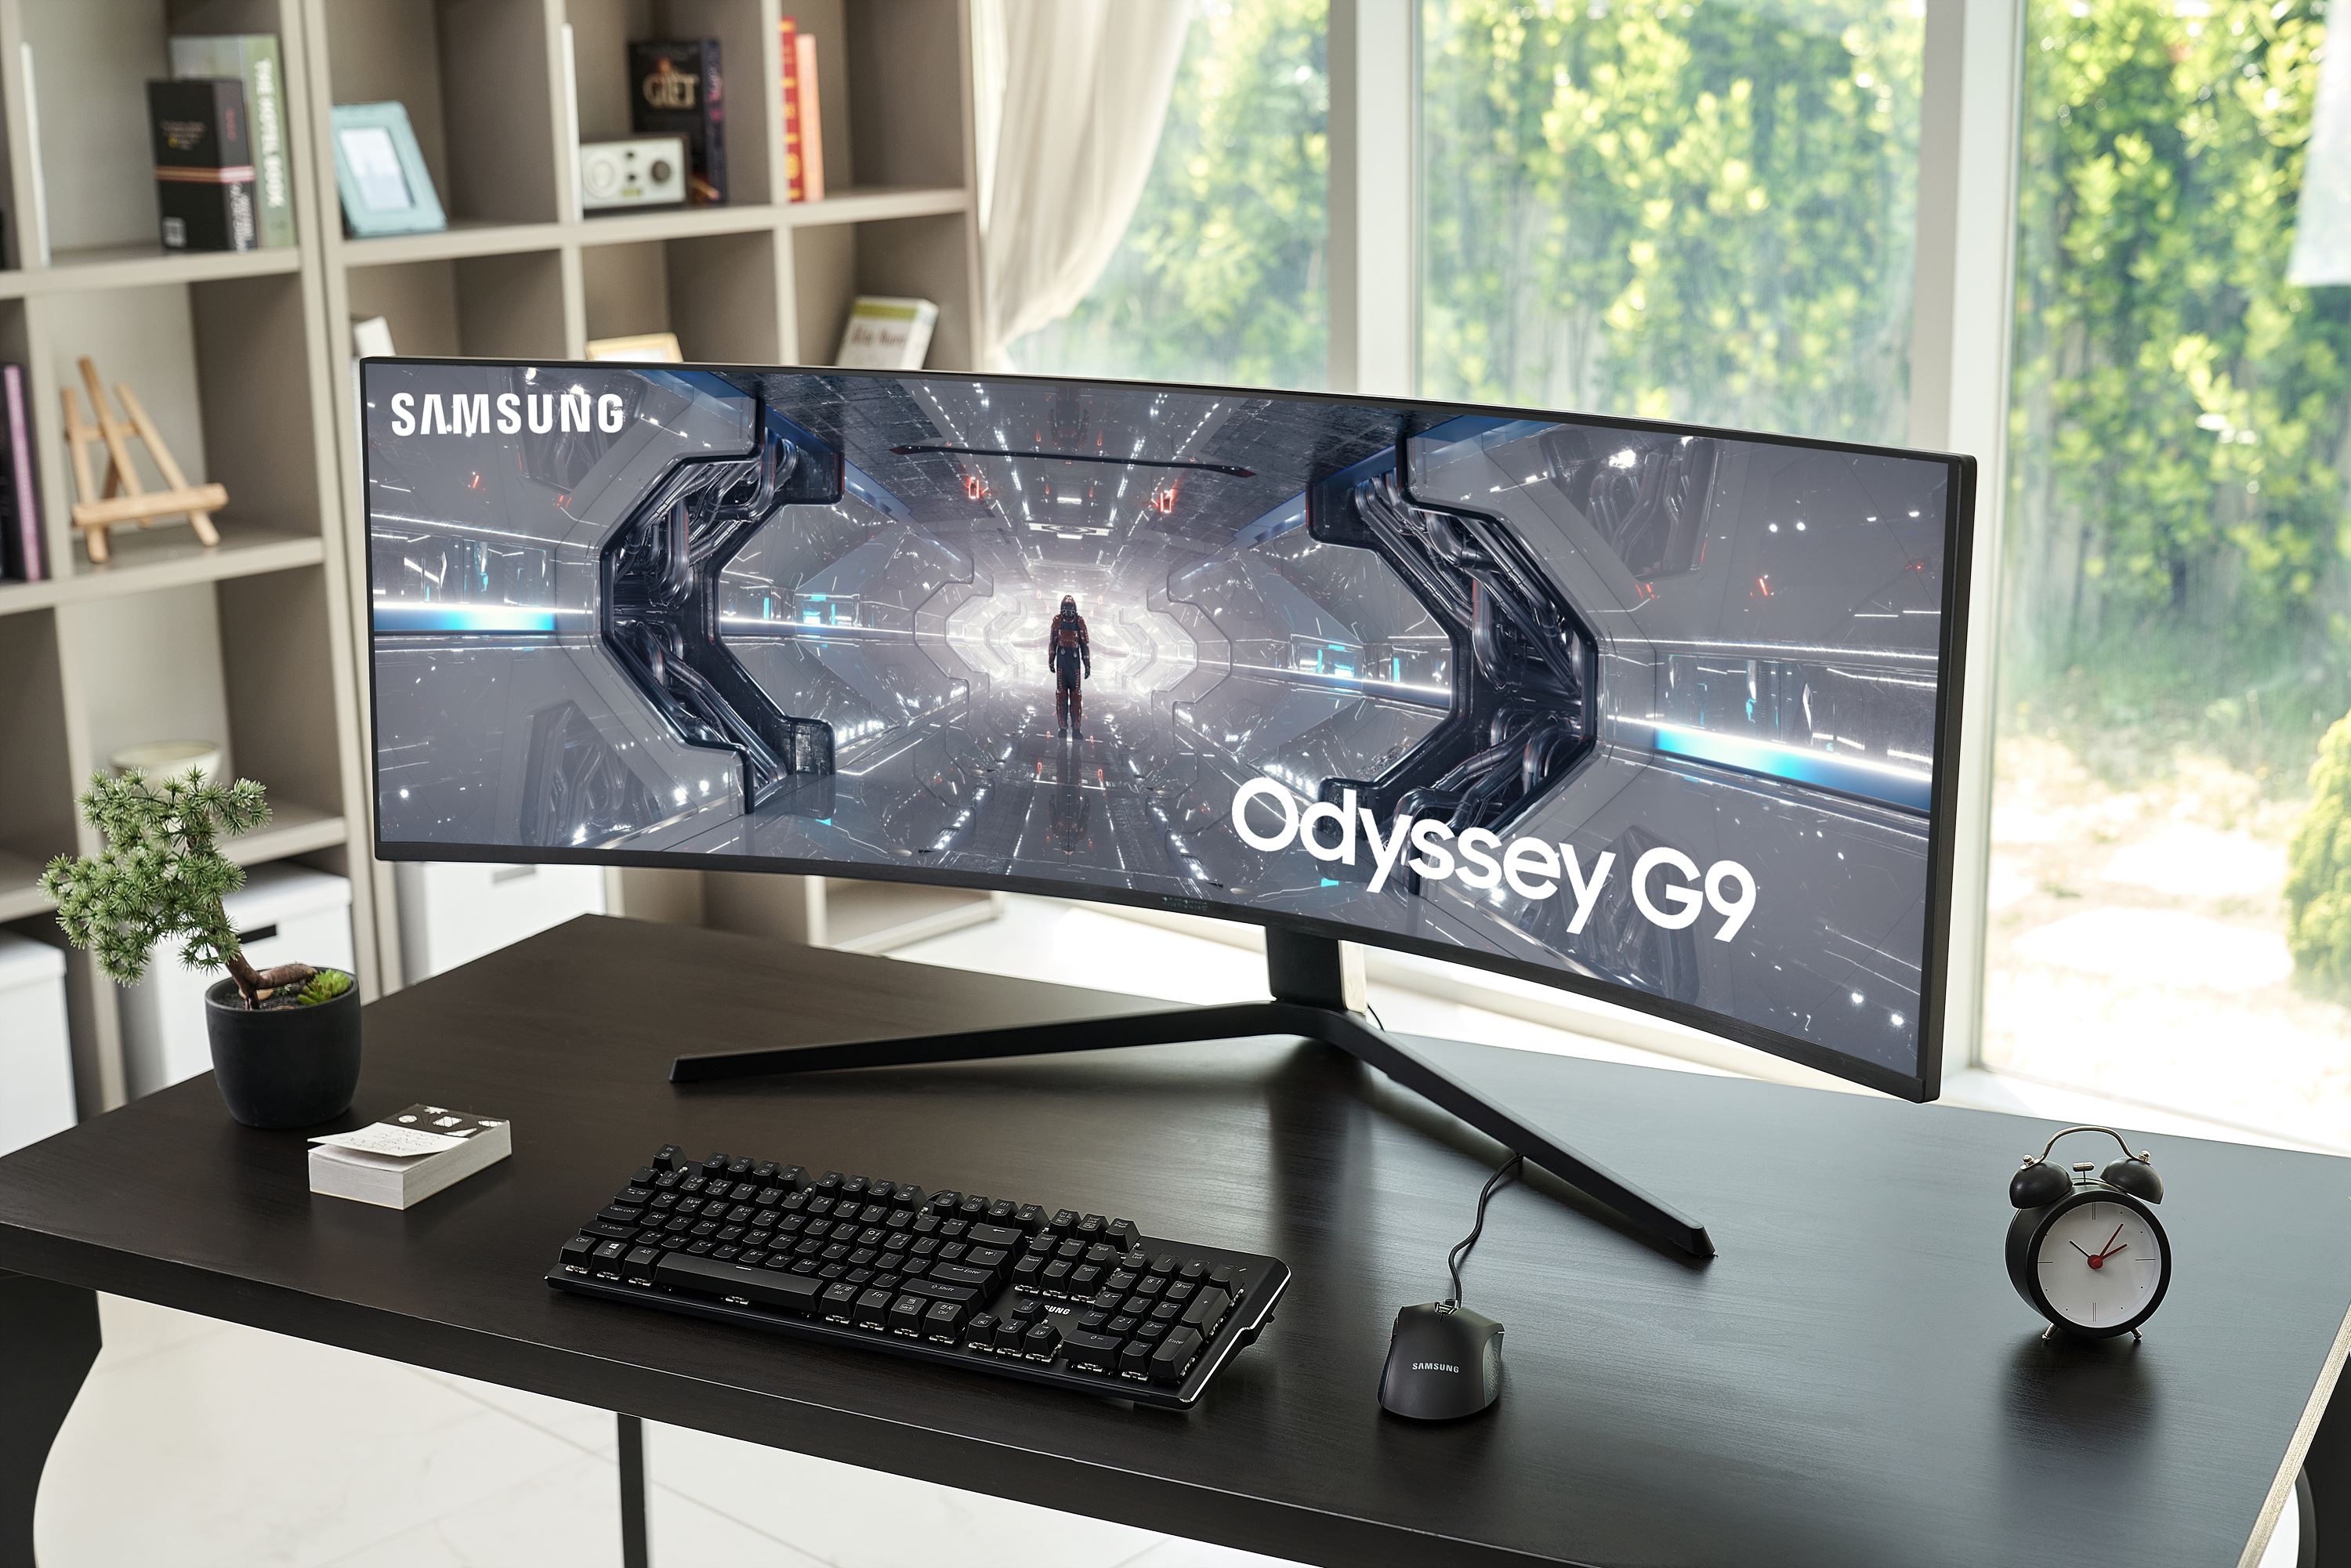 Samsung Odyssey G9 drops by 32 on Amazon News